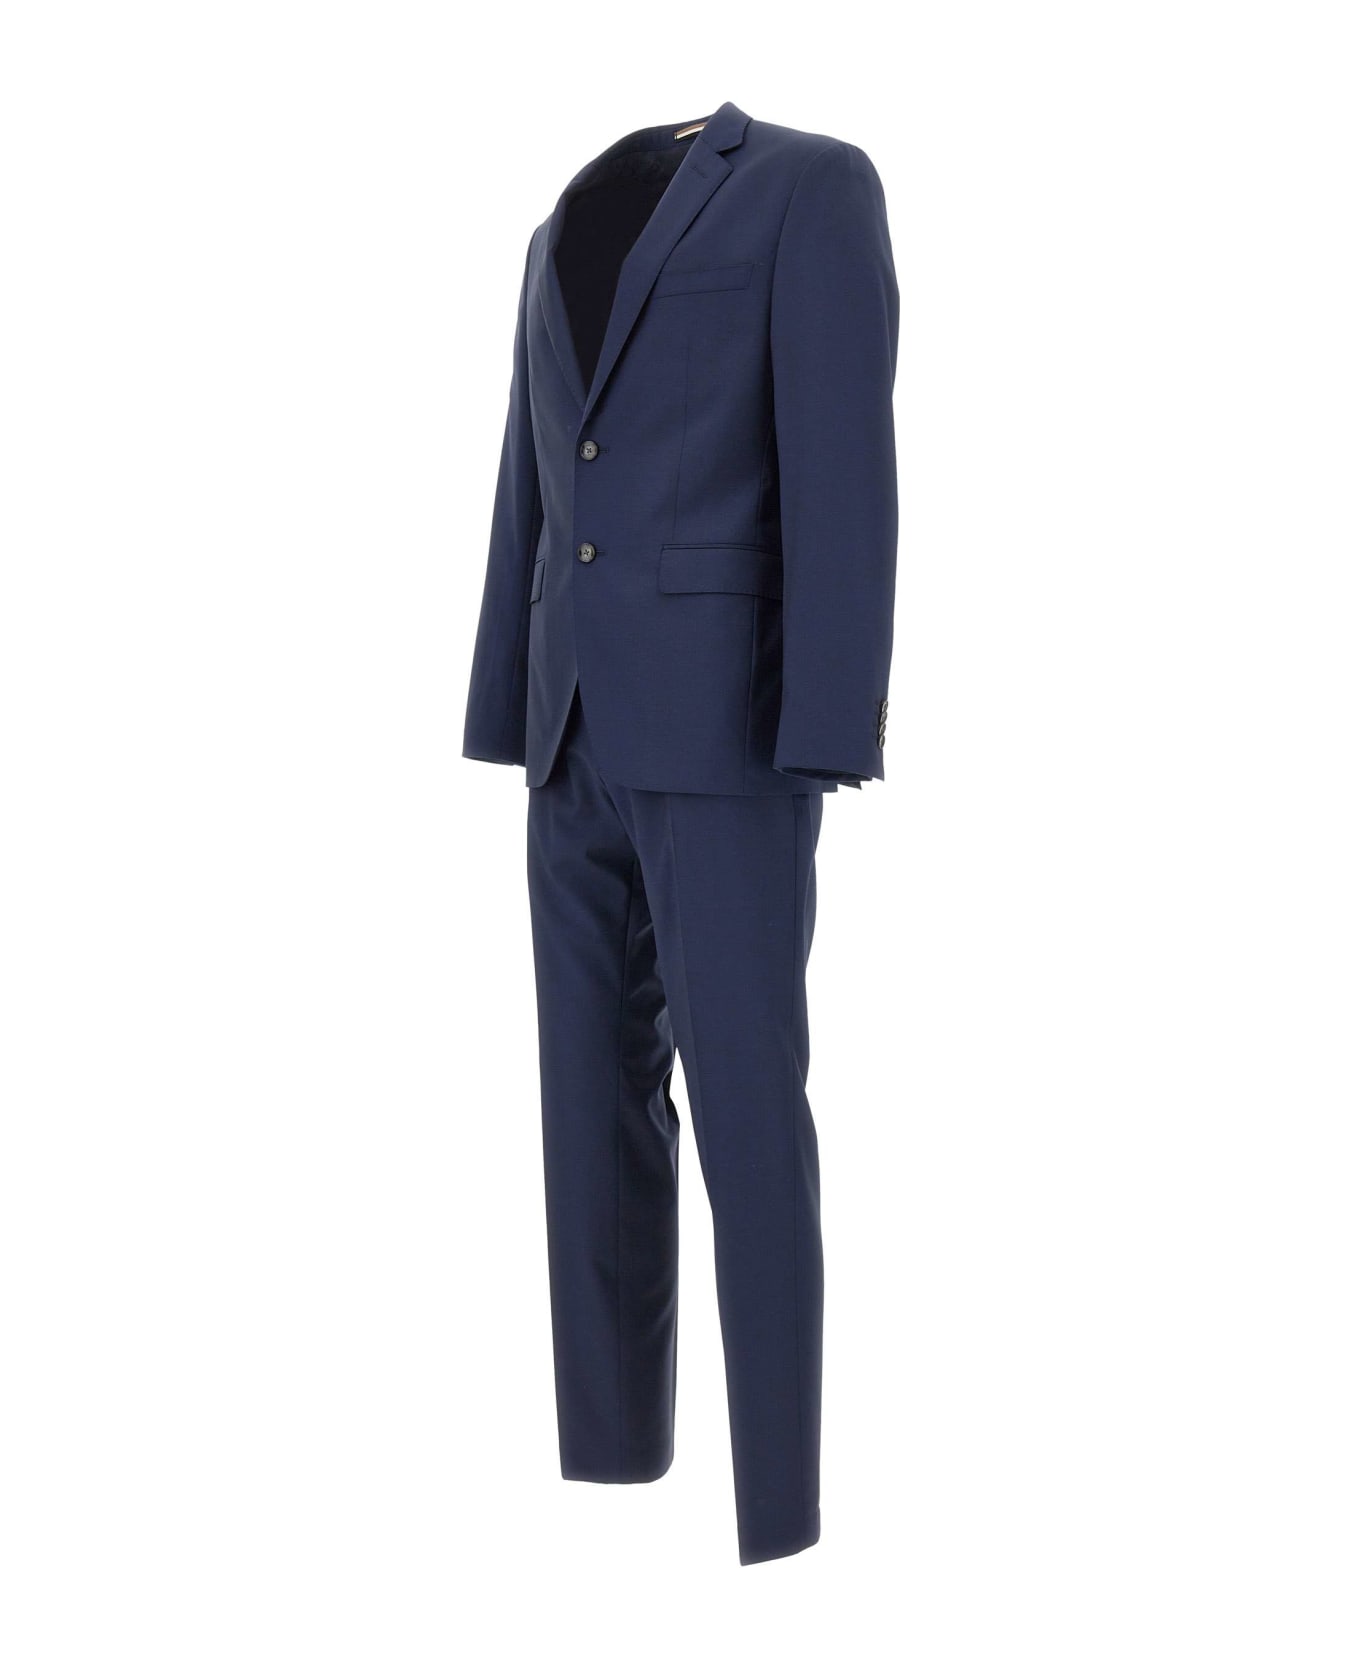 Hugo Boss "h-reymond" Two-piece Wool Suit - BLUE スーツ